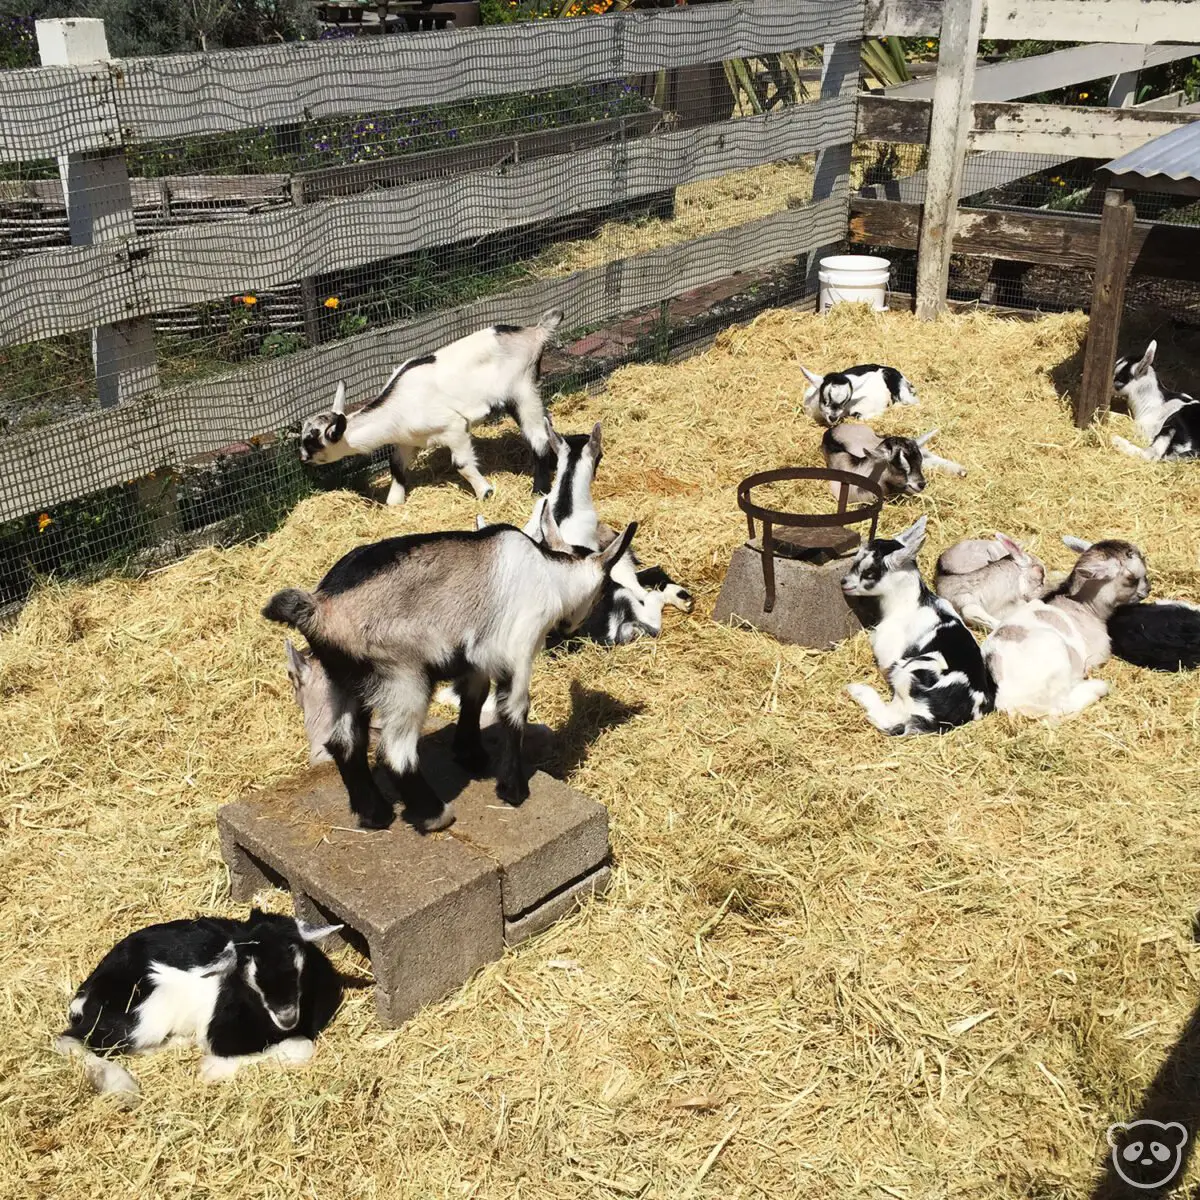 https://www.theadventuresofpandabear.com/wp-content/uploads/2018/02/harley-farm-baby-goats-in-pen-1200x1200-cropped.jpg